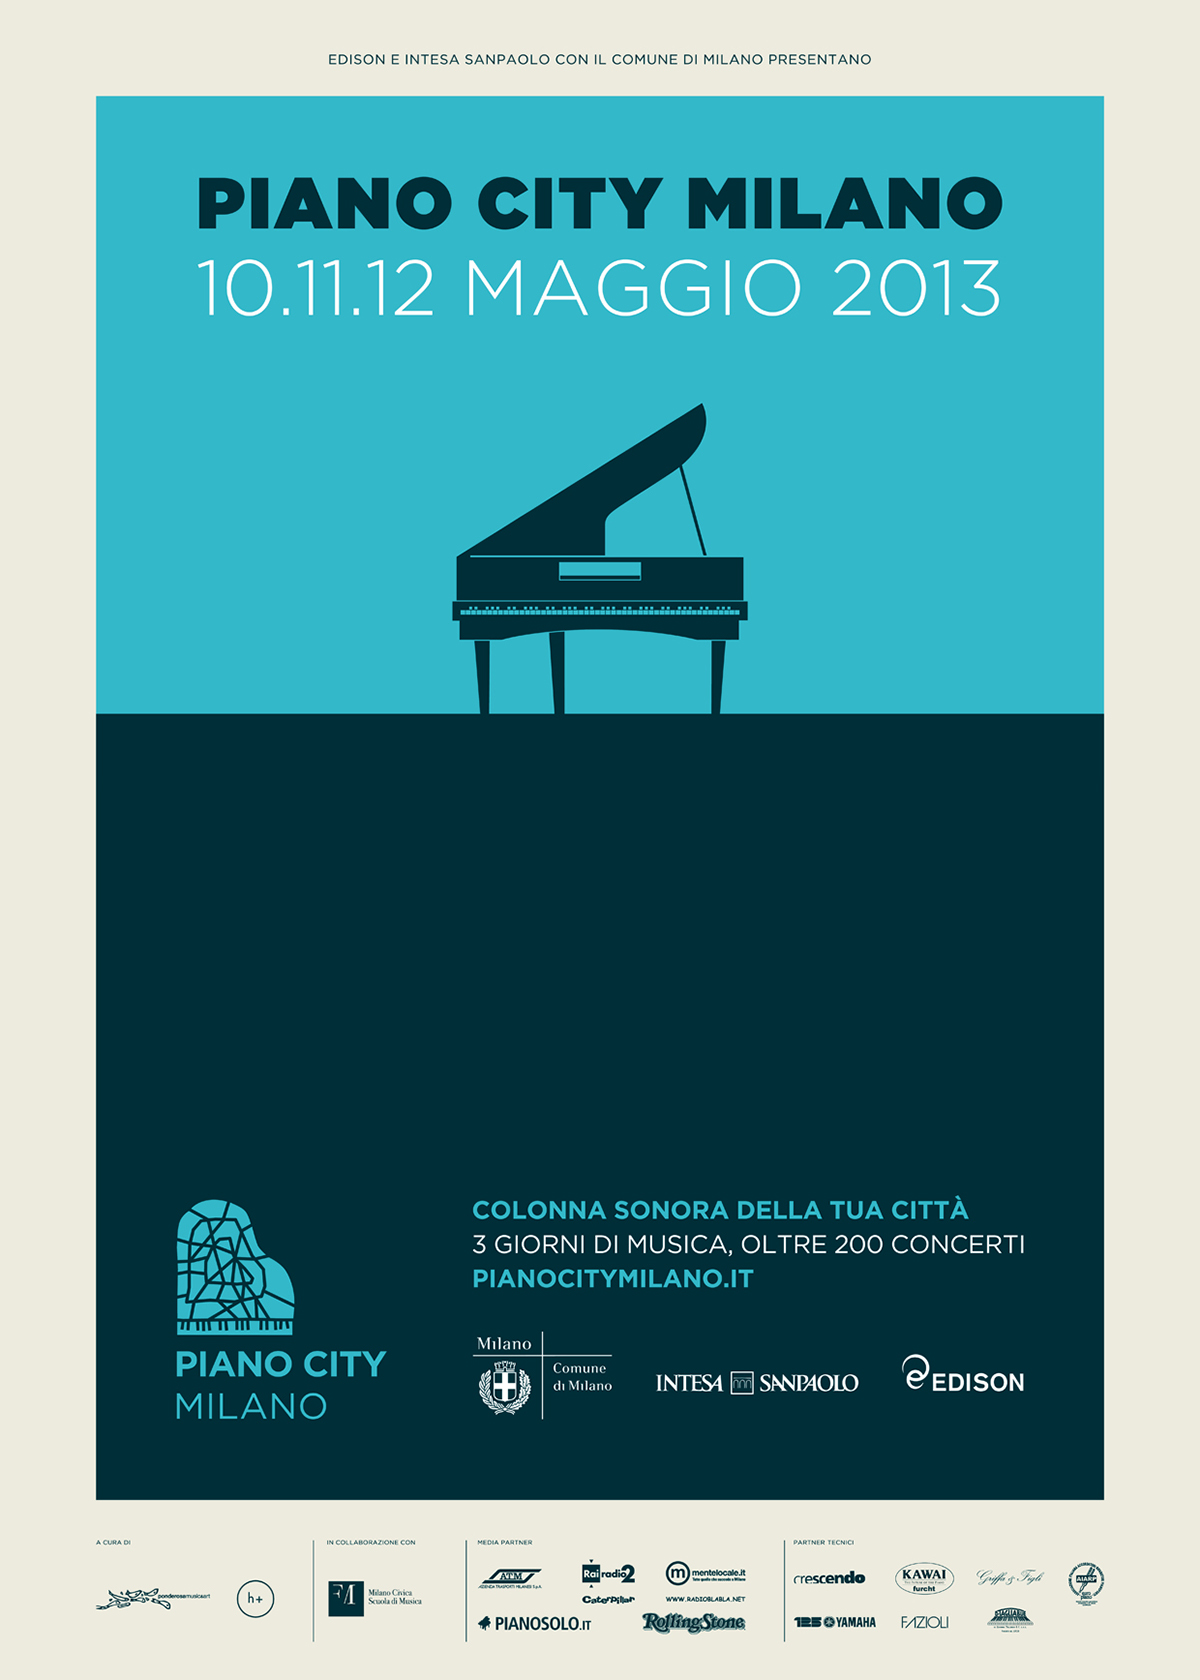 festival  event  icon  piano  city  Milan  italy brandimage